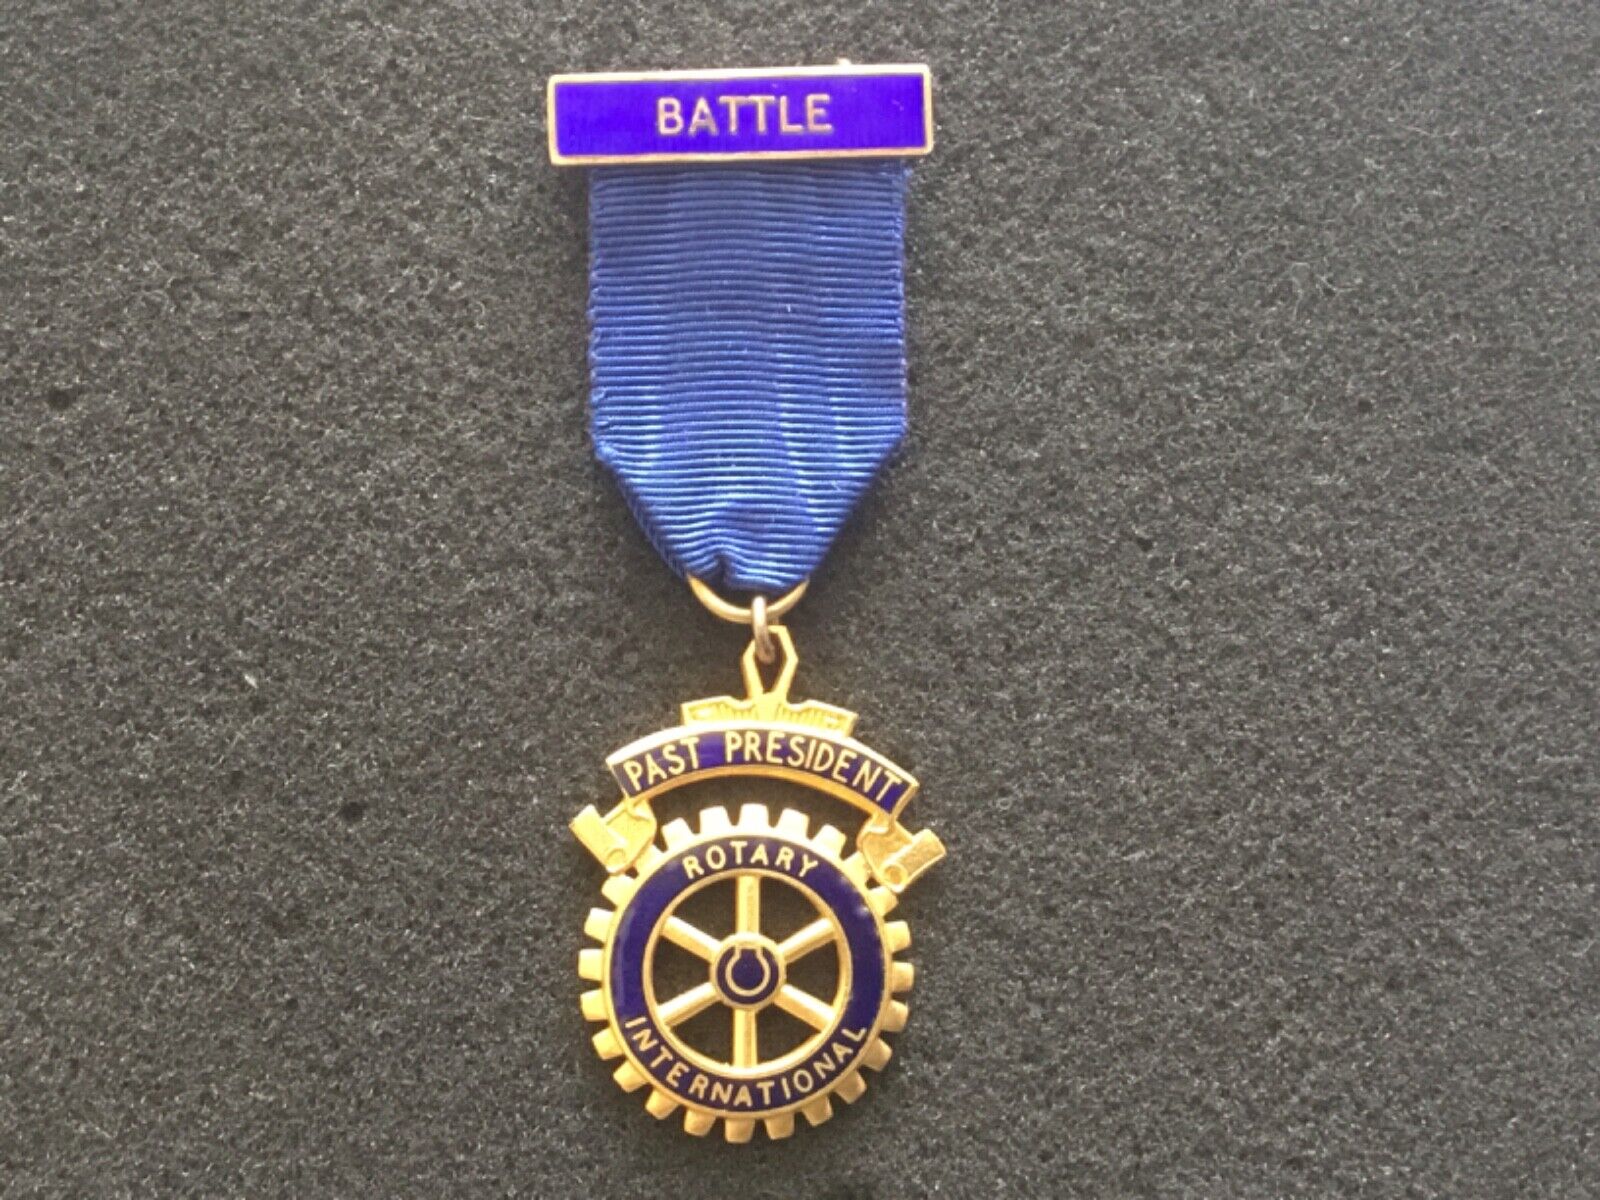 Rotary International - Past President Medal - Battle, East Sussex